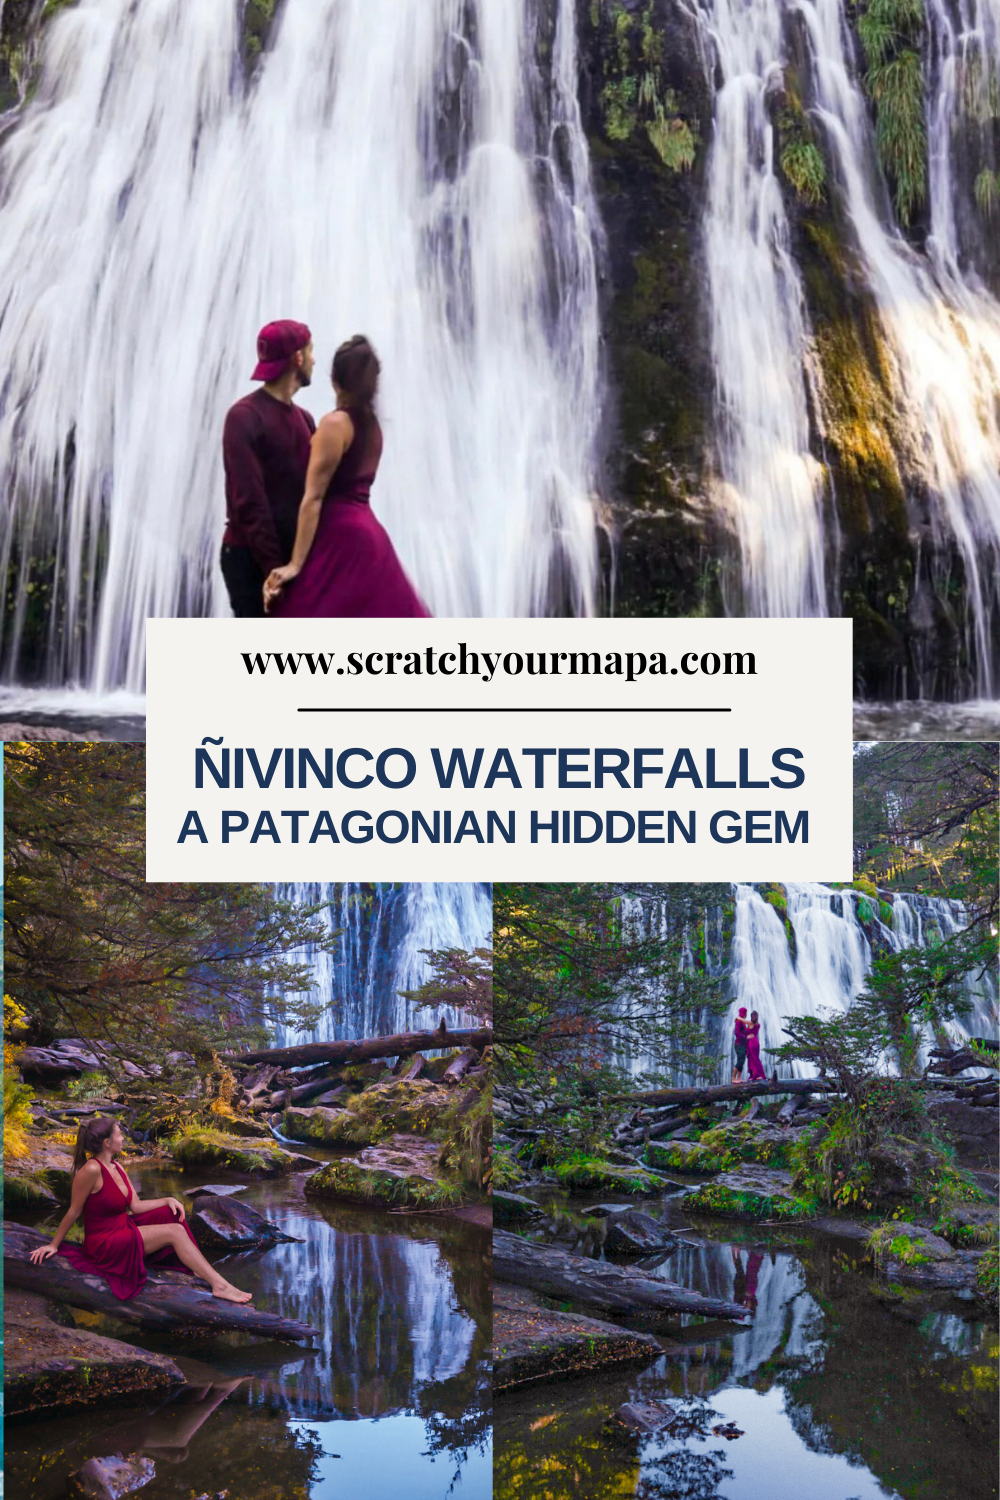 Ñivinco waterfalls pin 